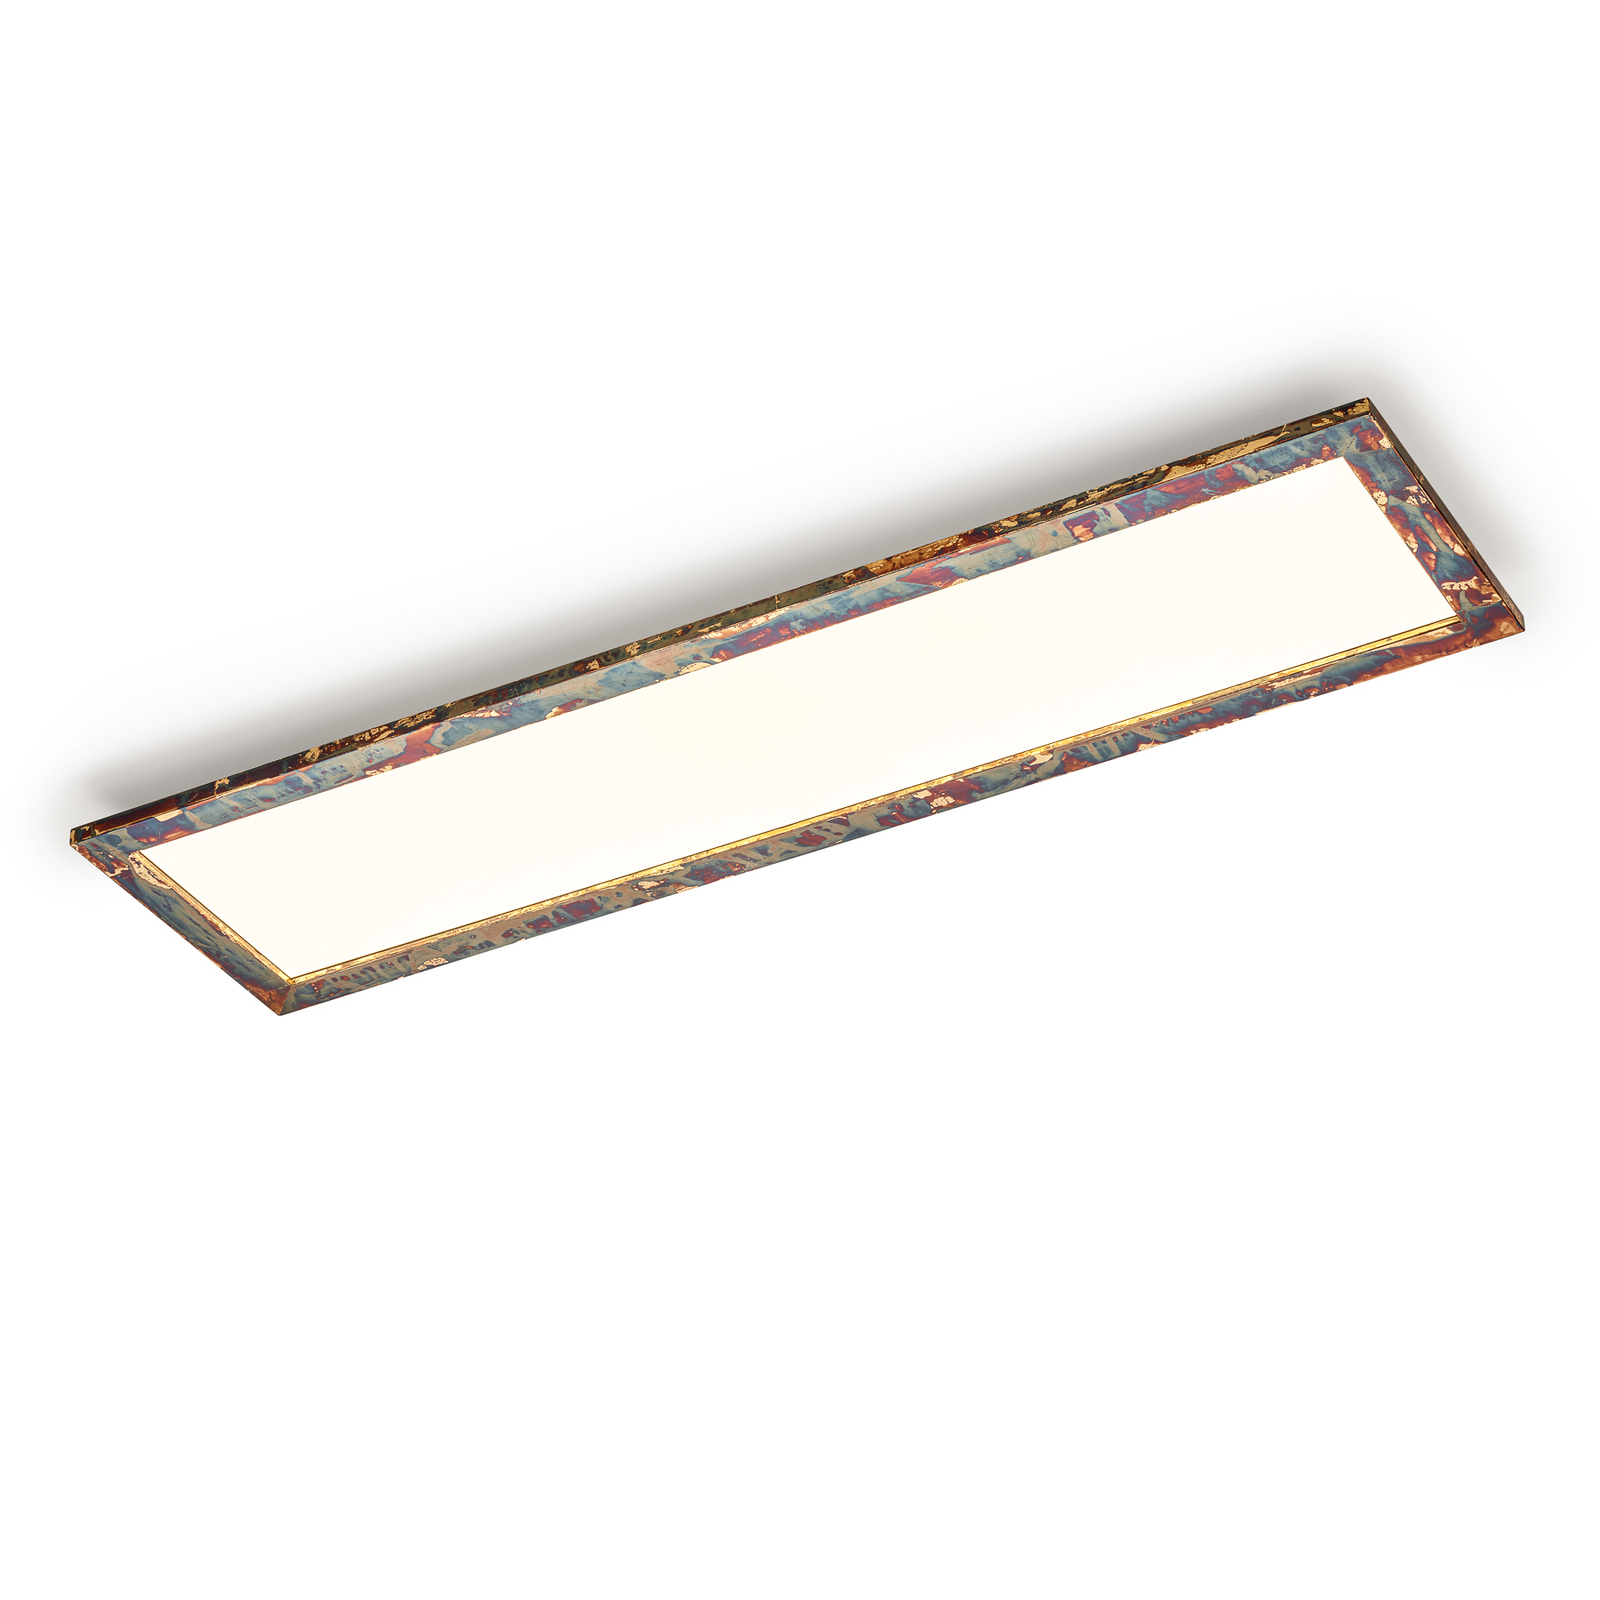 Quitani Aurinor LED panel, arany színű, 125 cm-es